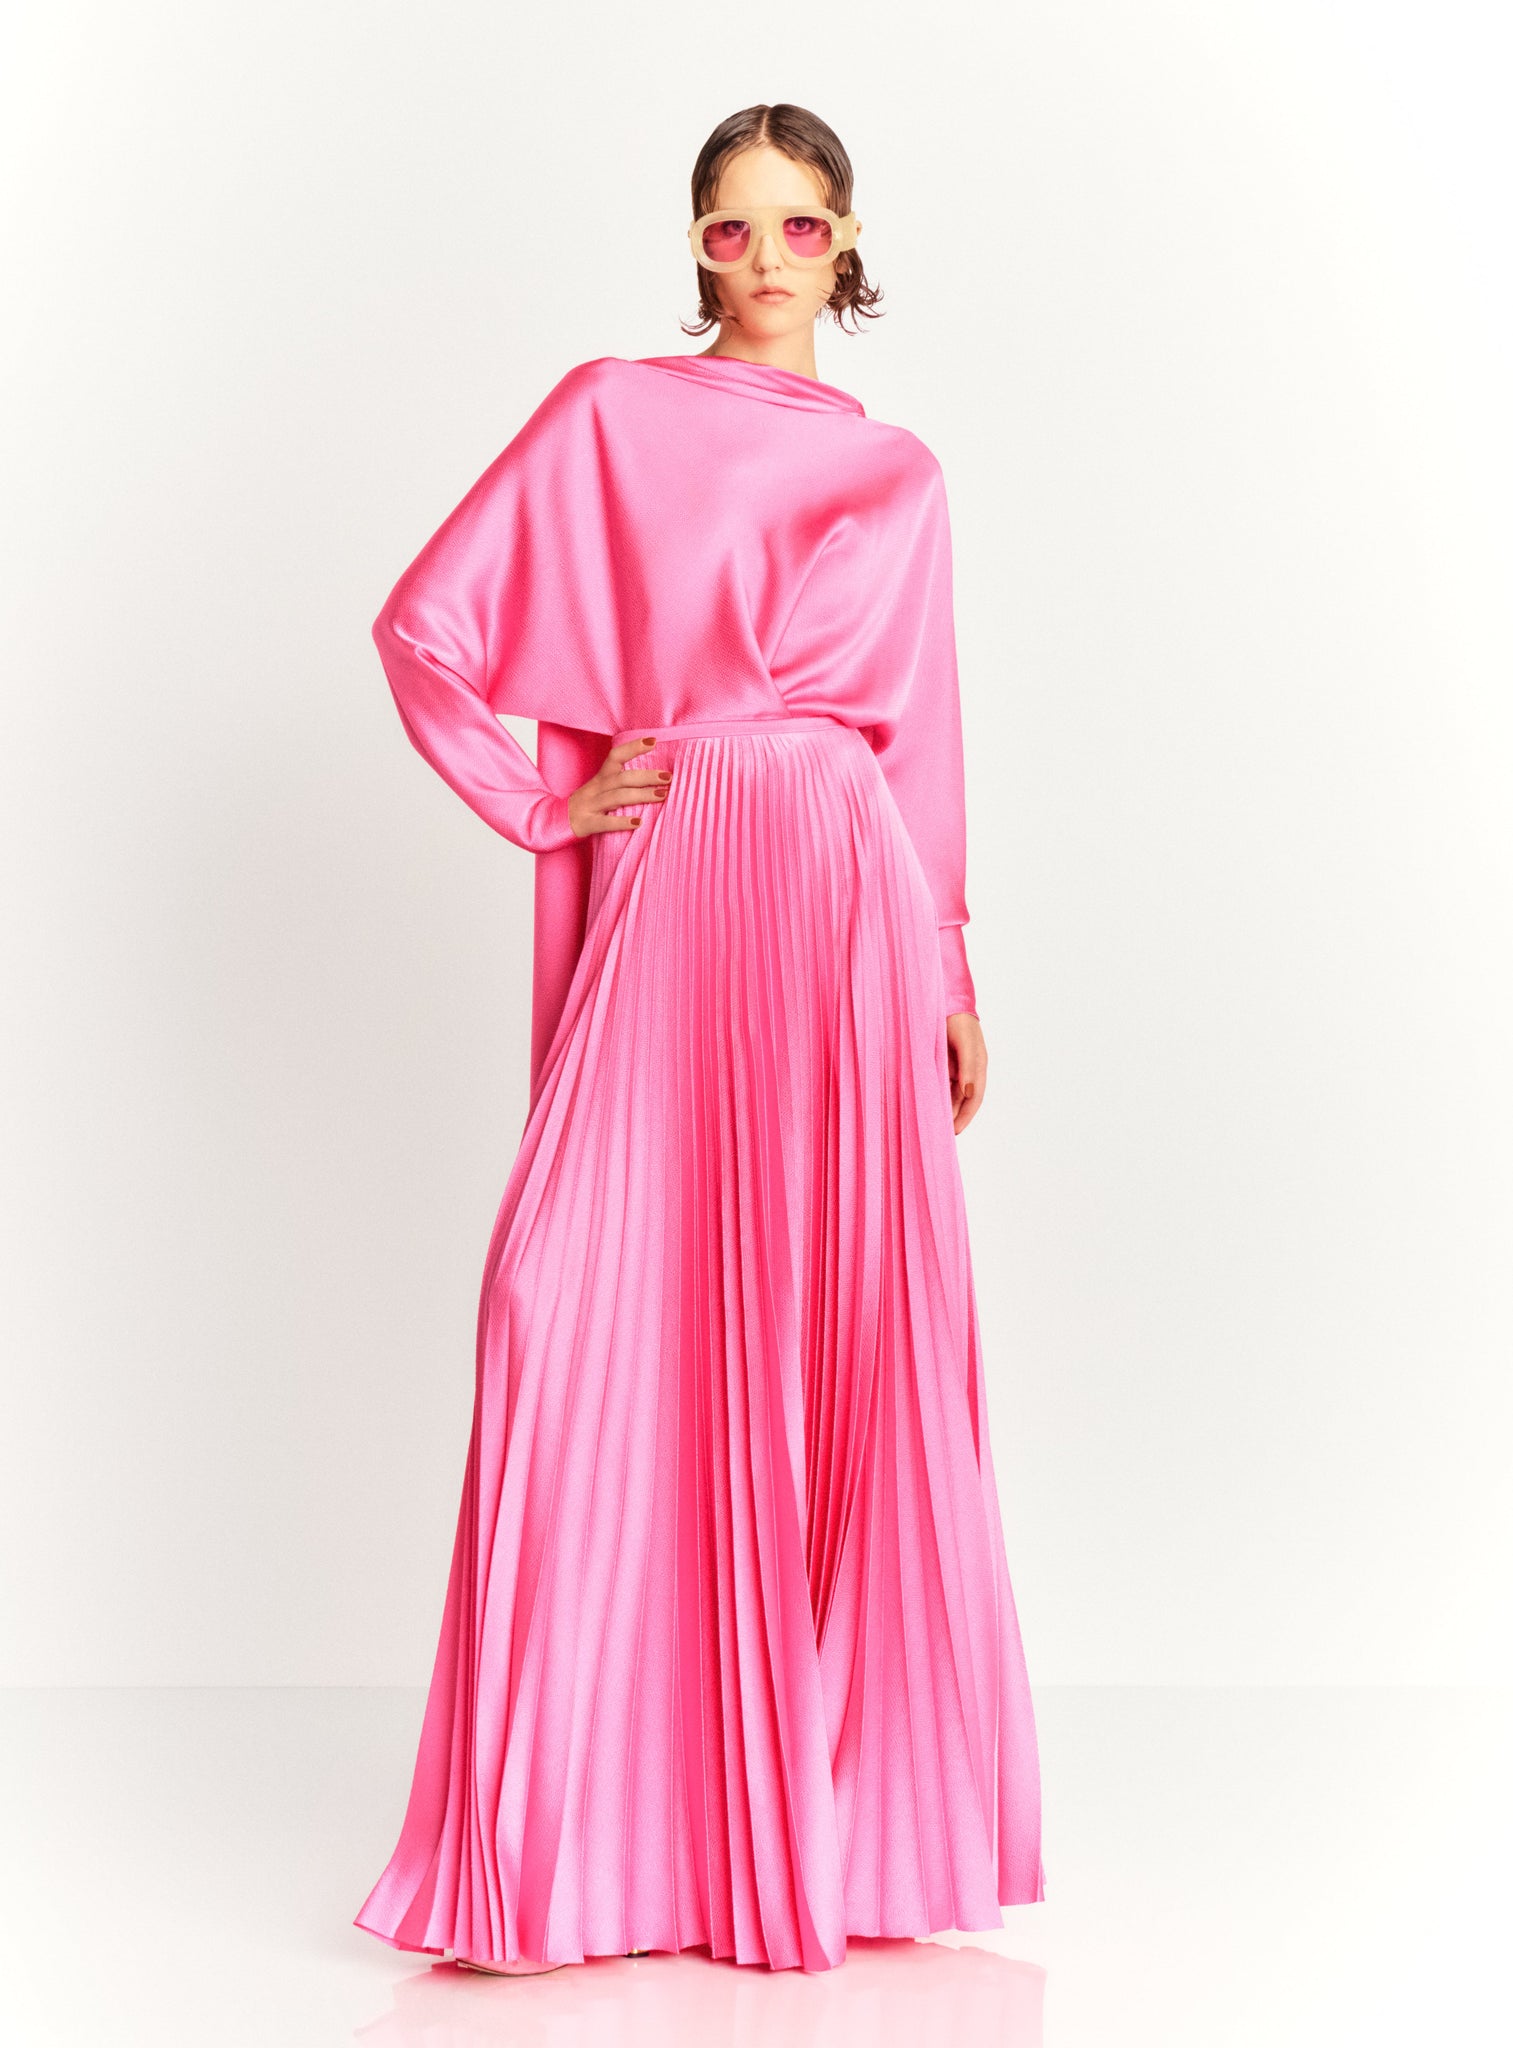 The Soraia Bodysuit in Light Pink